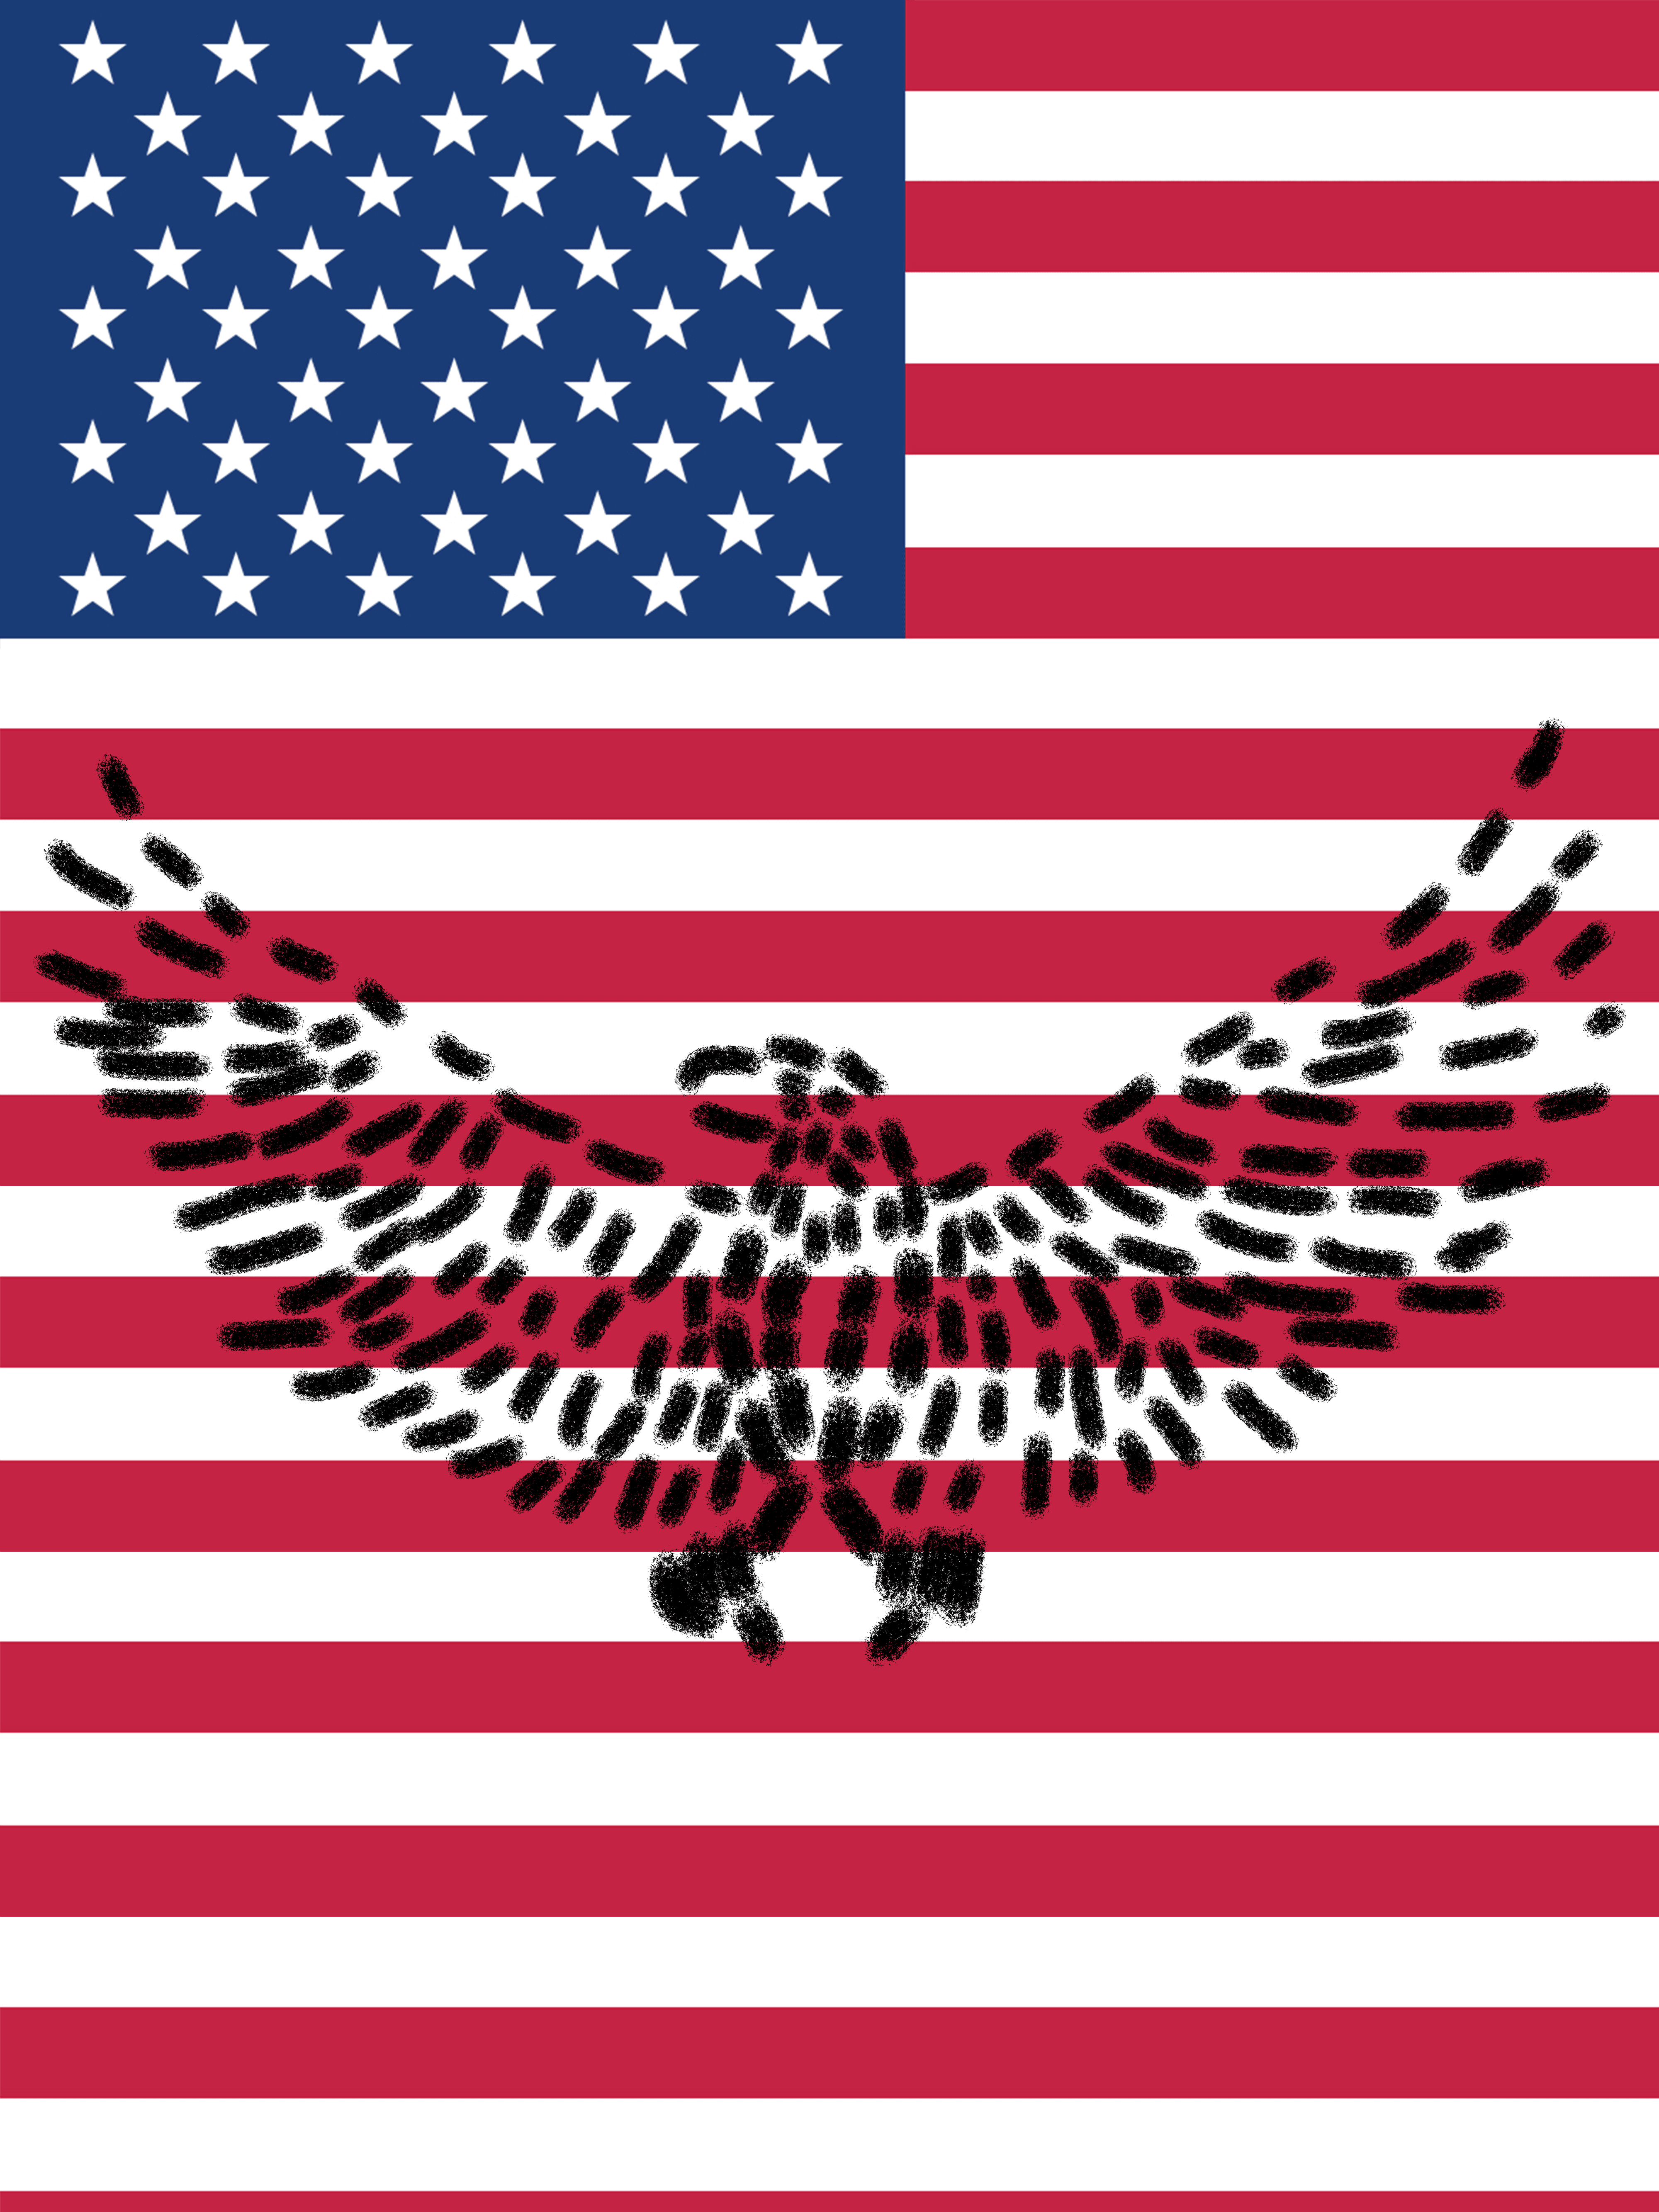 24 # Country Symbol : United States - Bald Eagle